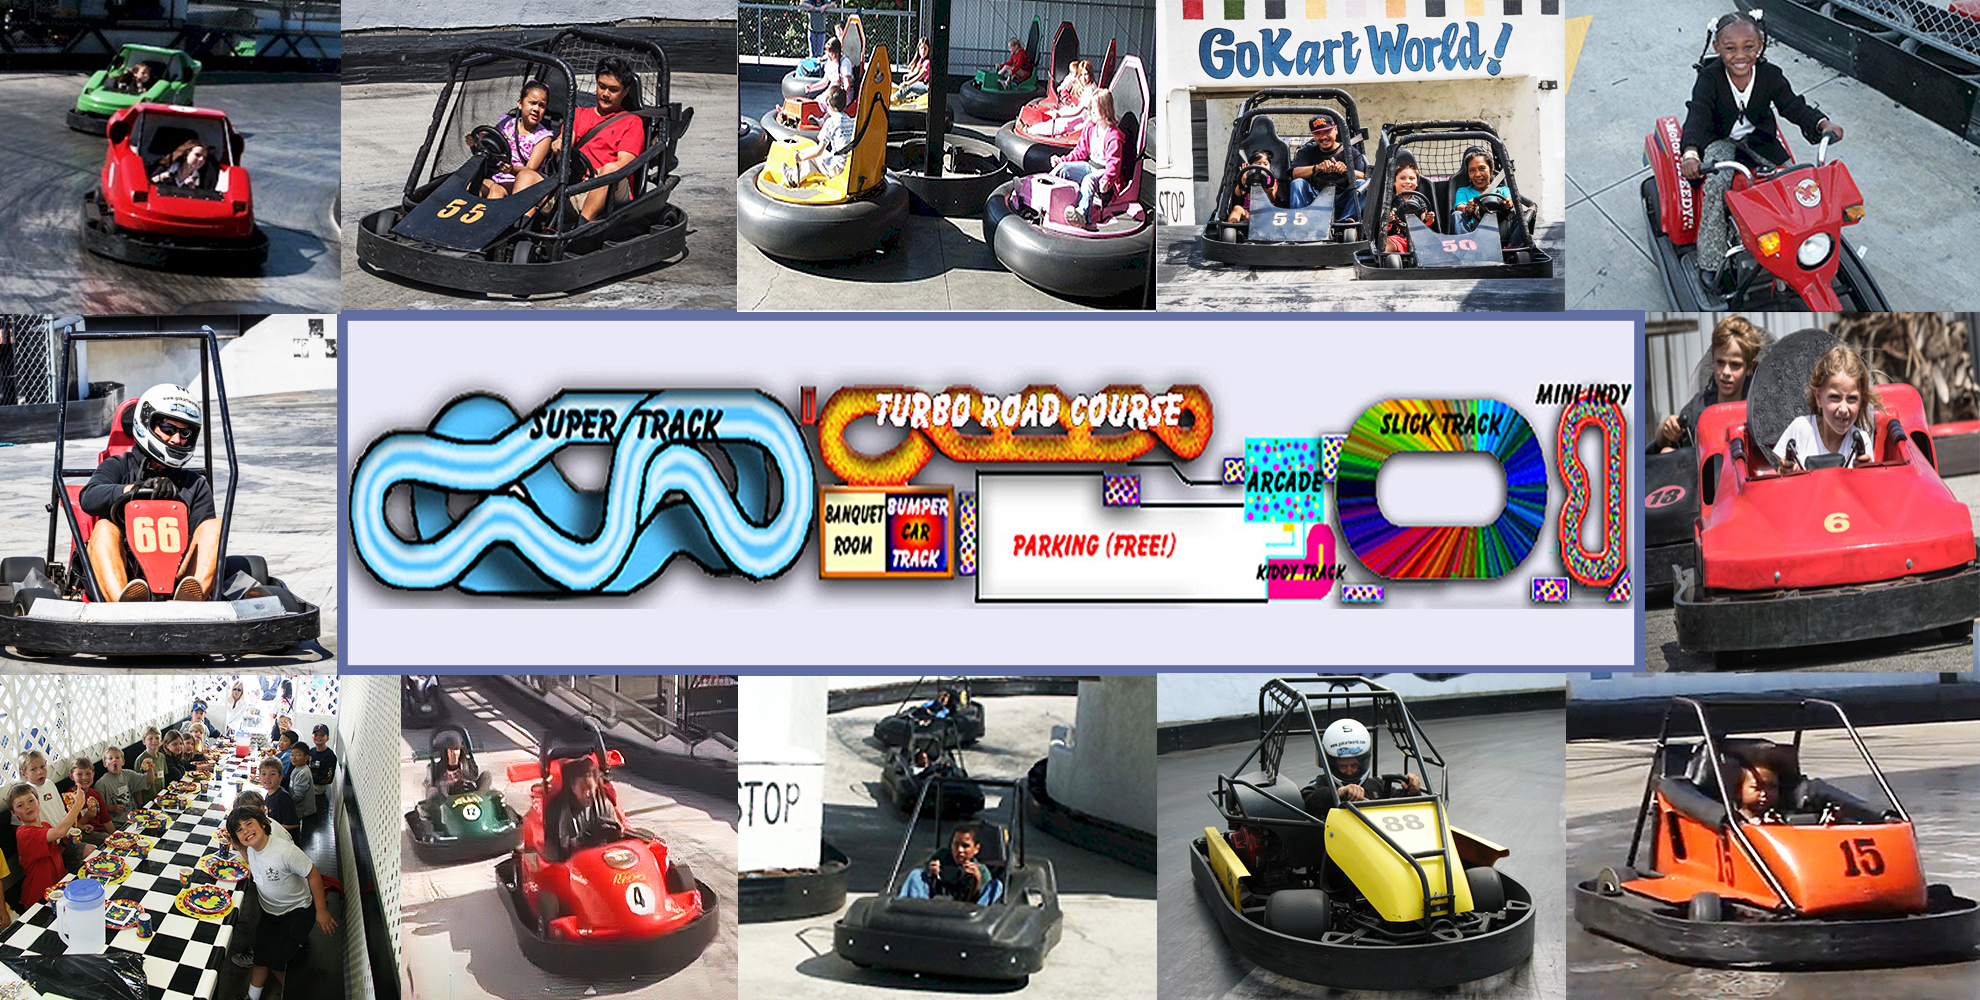 Go Kart World Skills Driving Course – GO KART WORLD